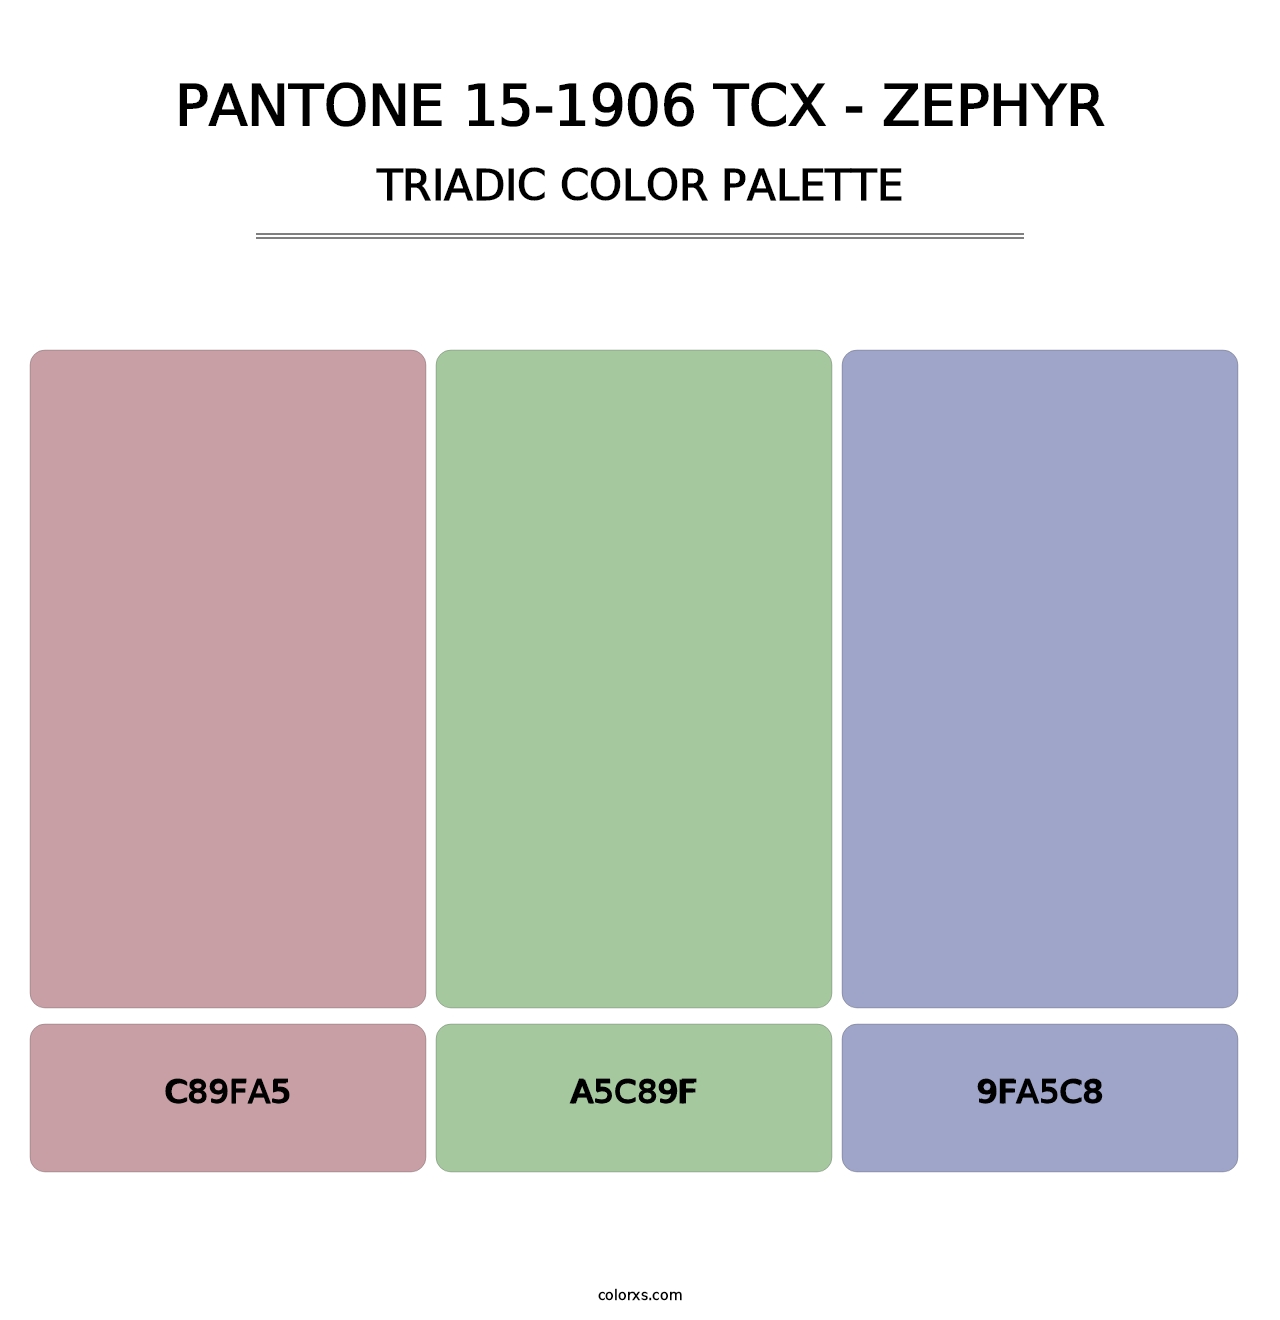 PANTONE 15-1906 TCX - Zephyr - Triadic Color Palette